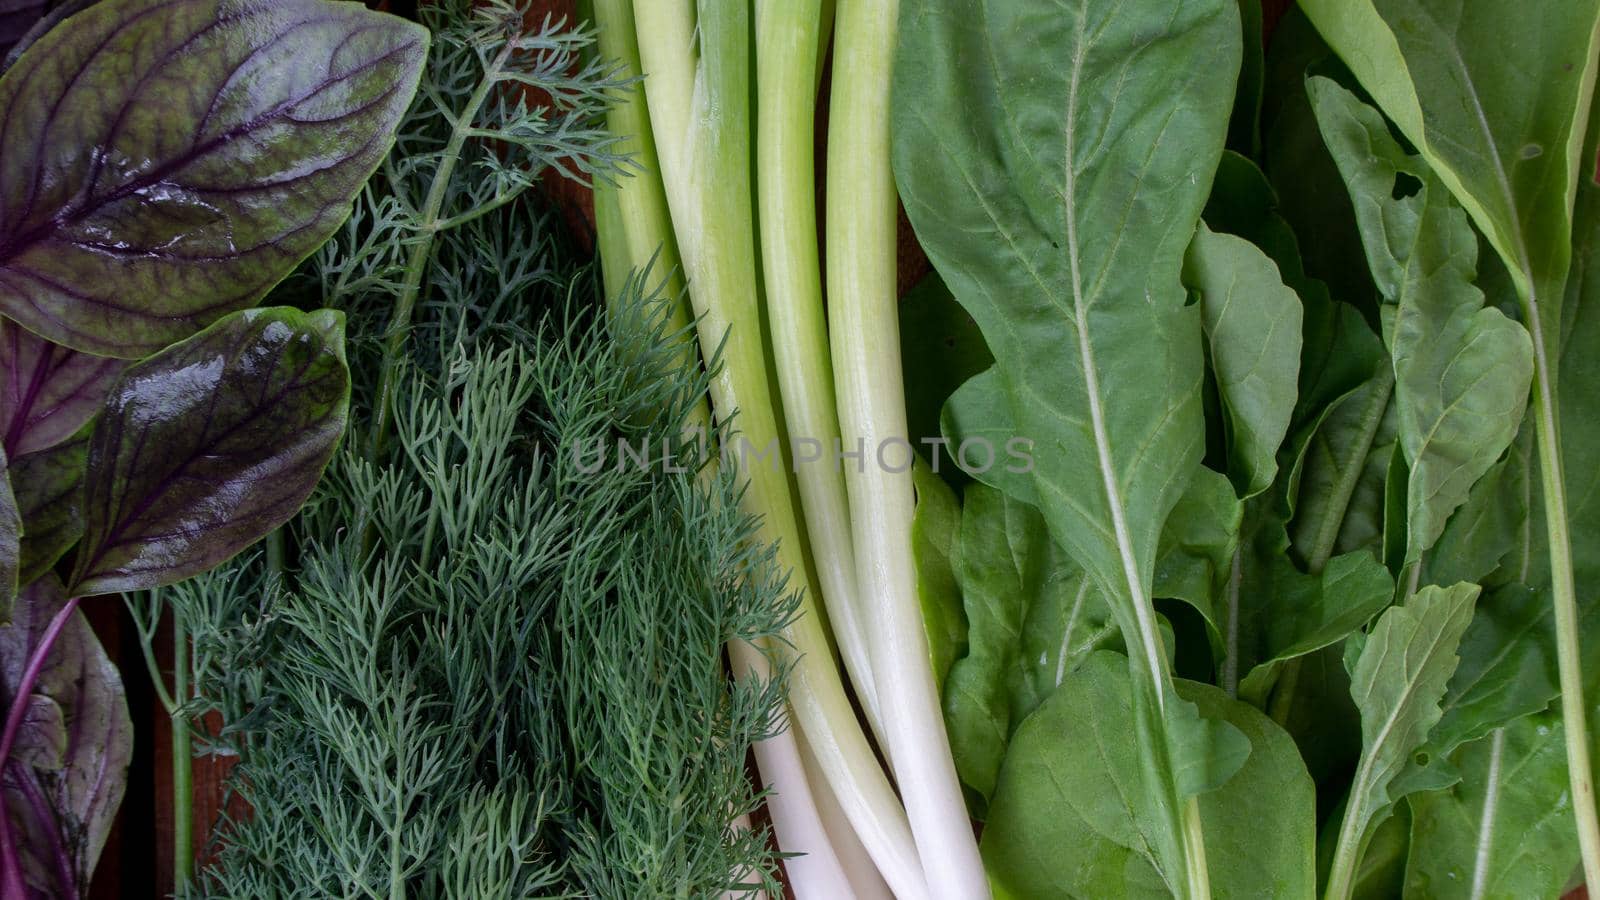 greens background - basil, dill, arugula, green onions. High quality photo